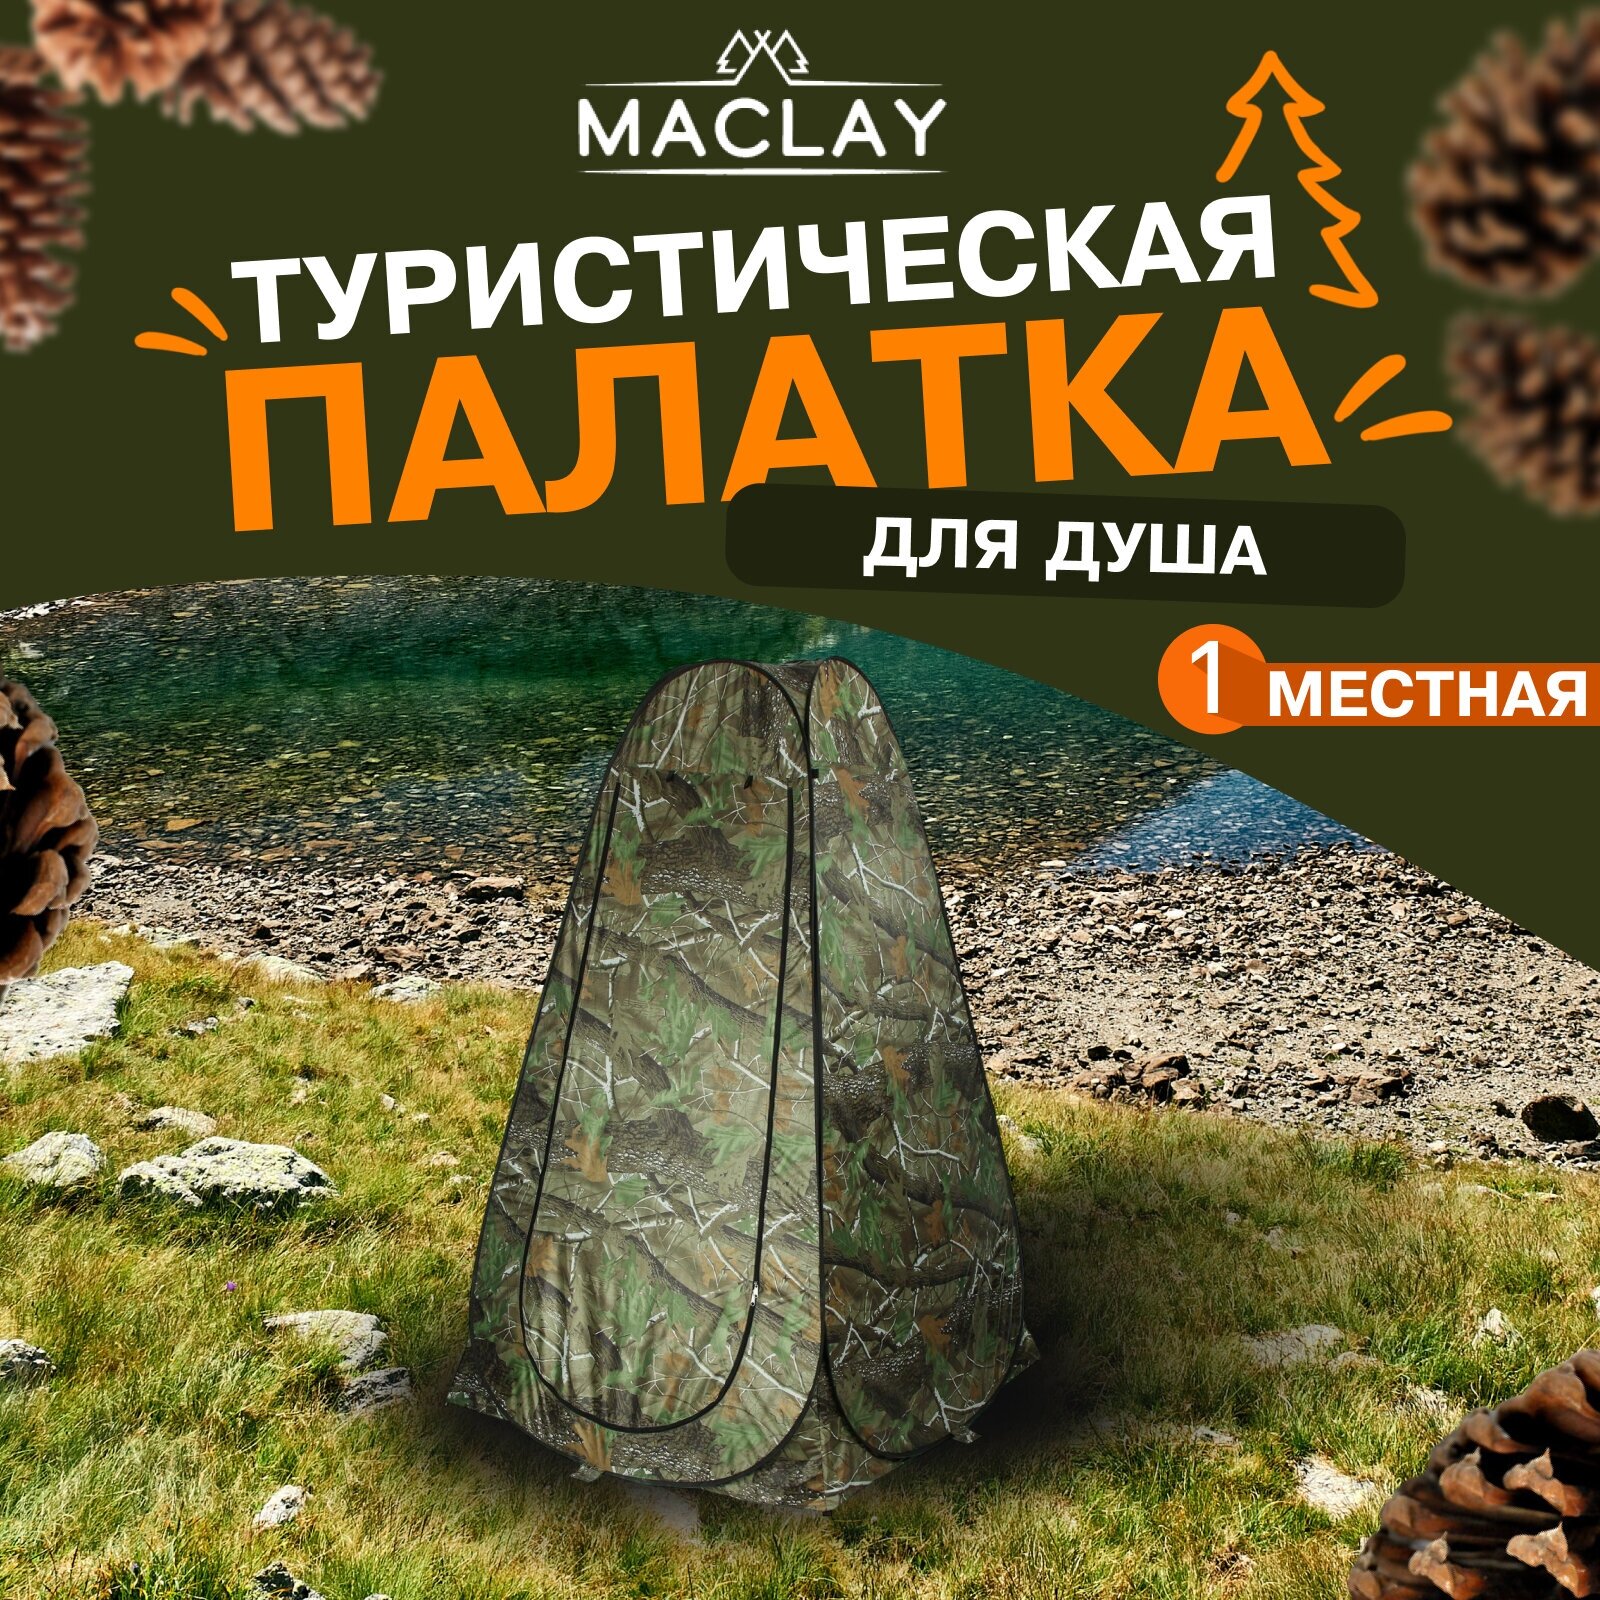 Палатка Maclay, туристическая, самораскрывающаяся для душа, размер 120 х 120 х 195 см, цвет хаки